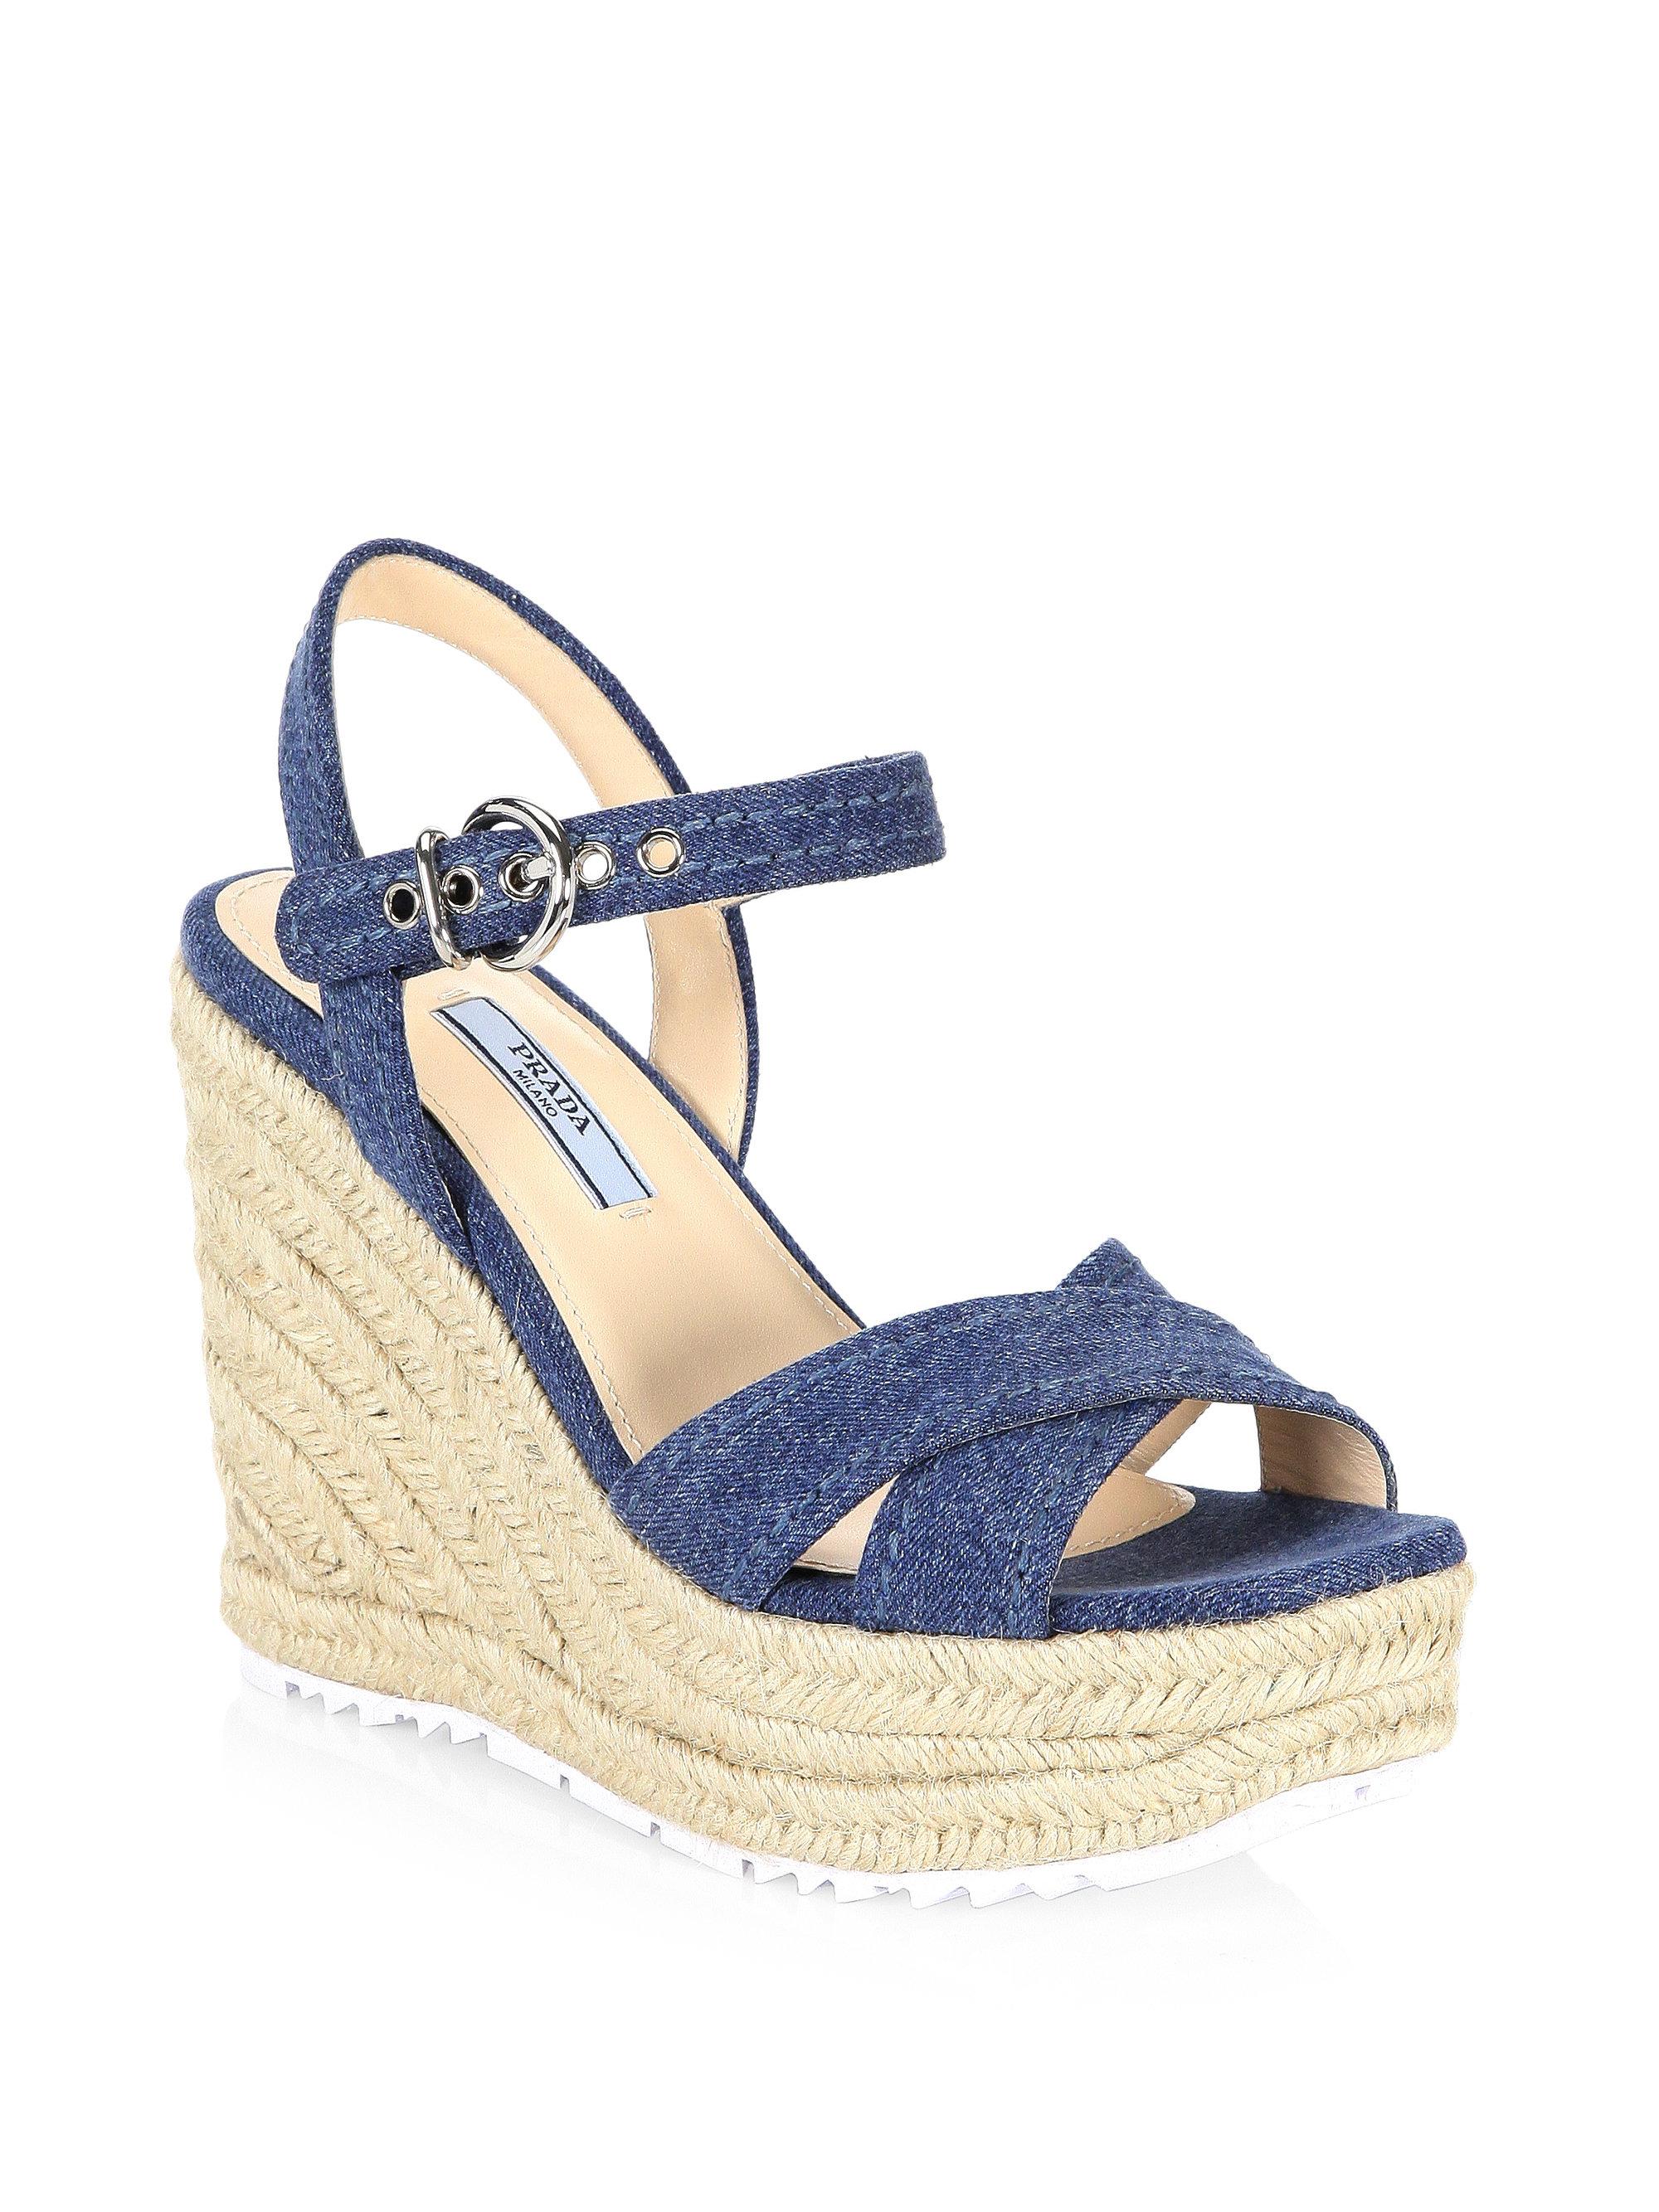 Prada Denim & Raffia Wedge Sandals in Blue - Lyst